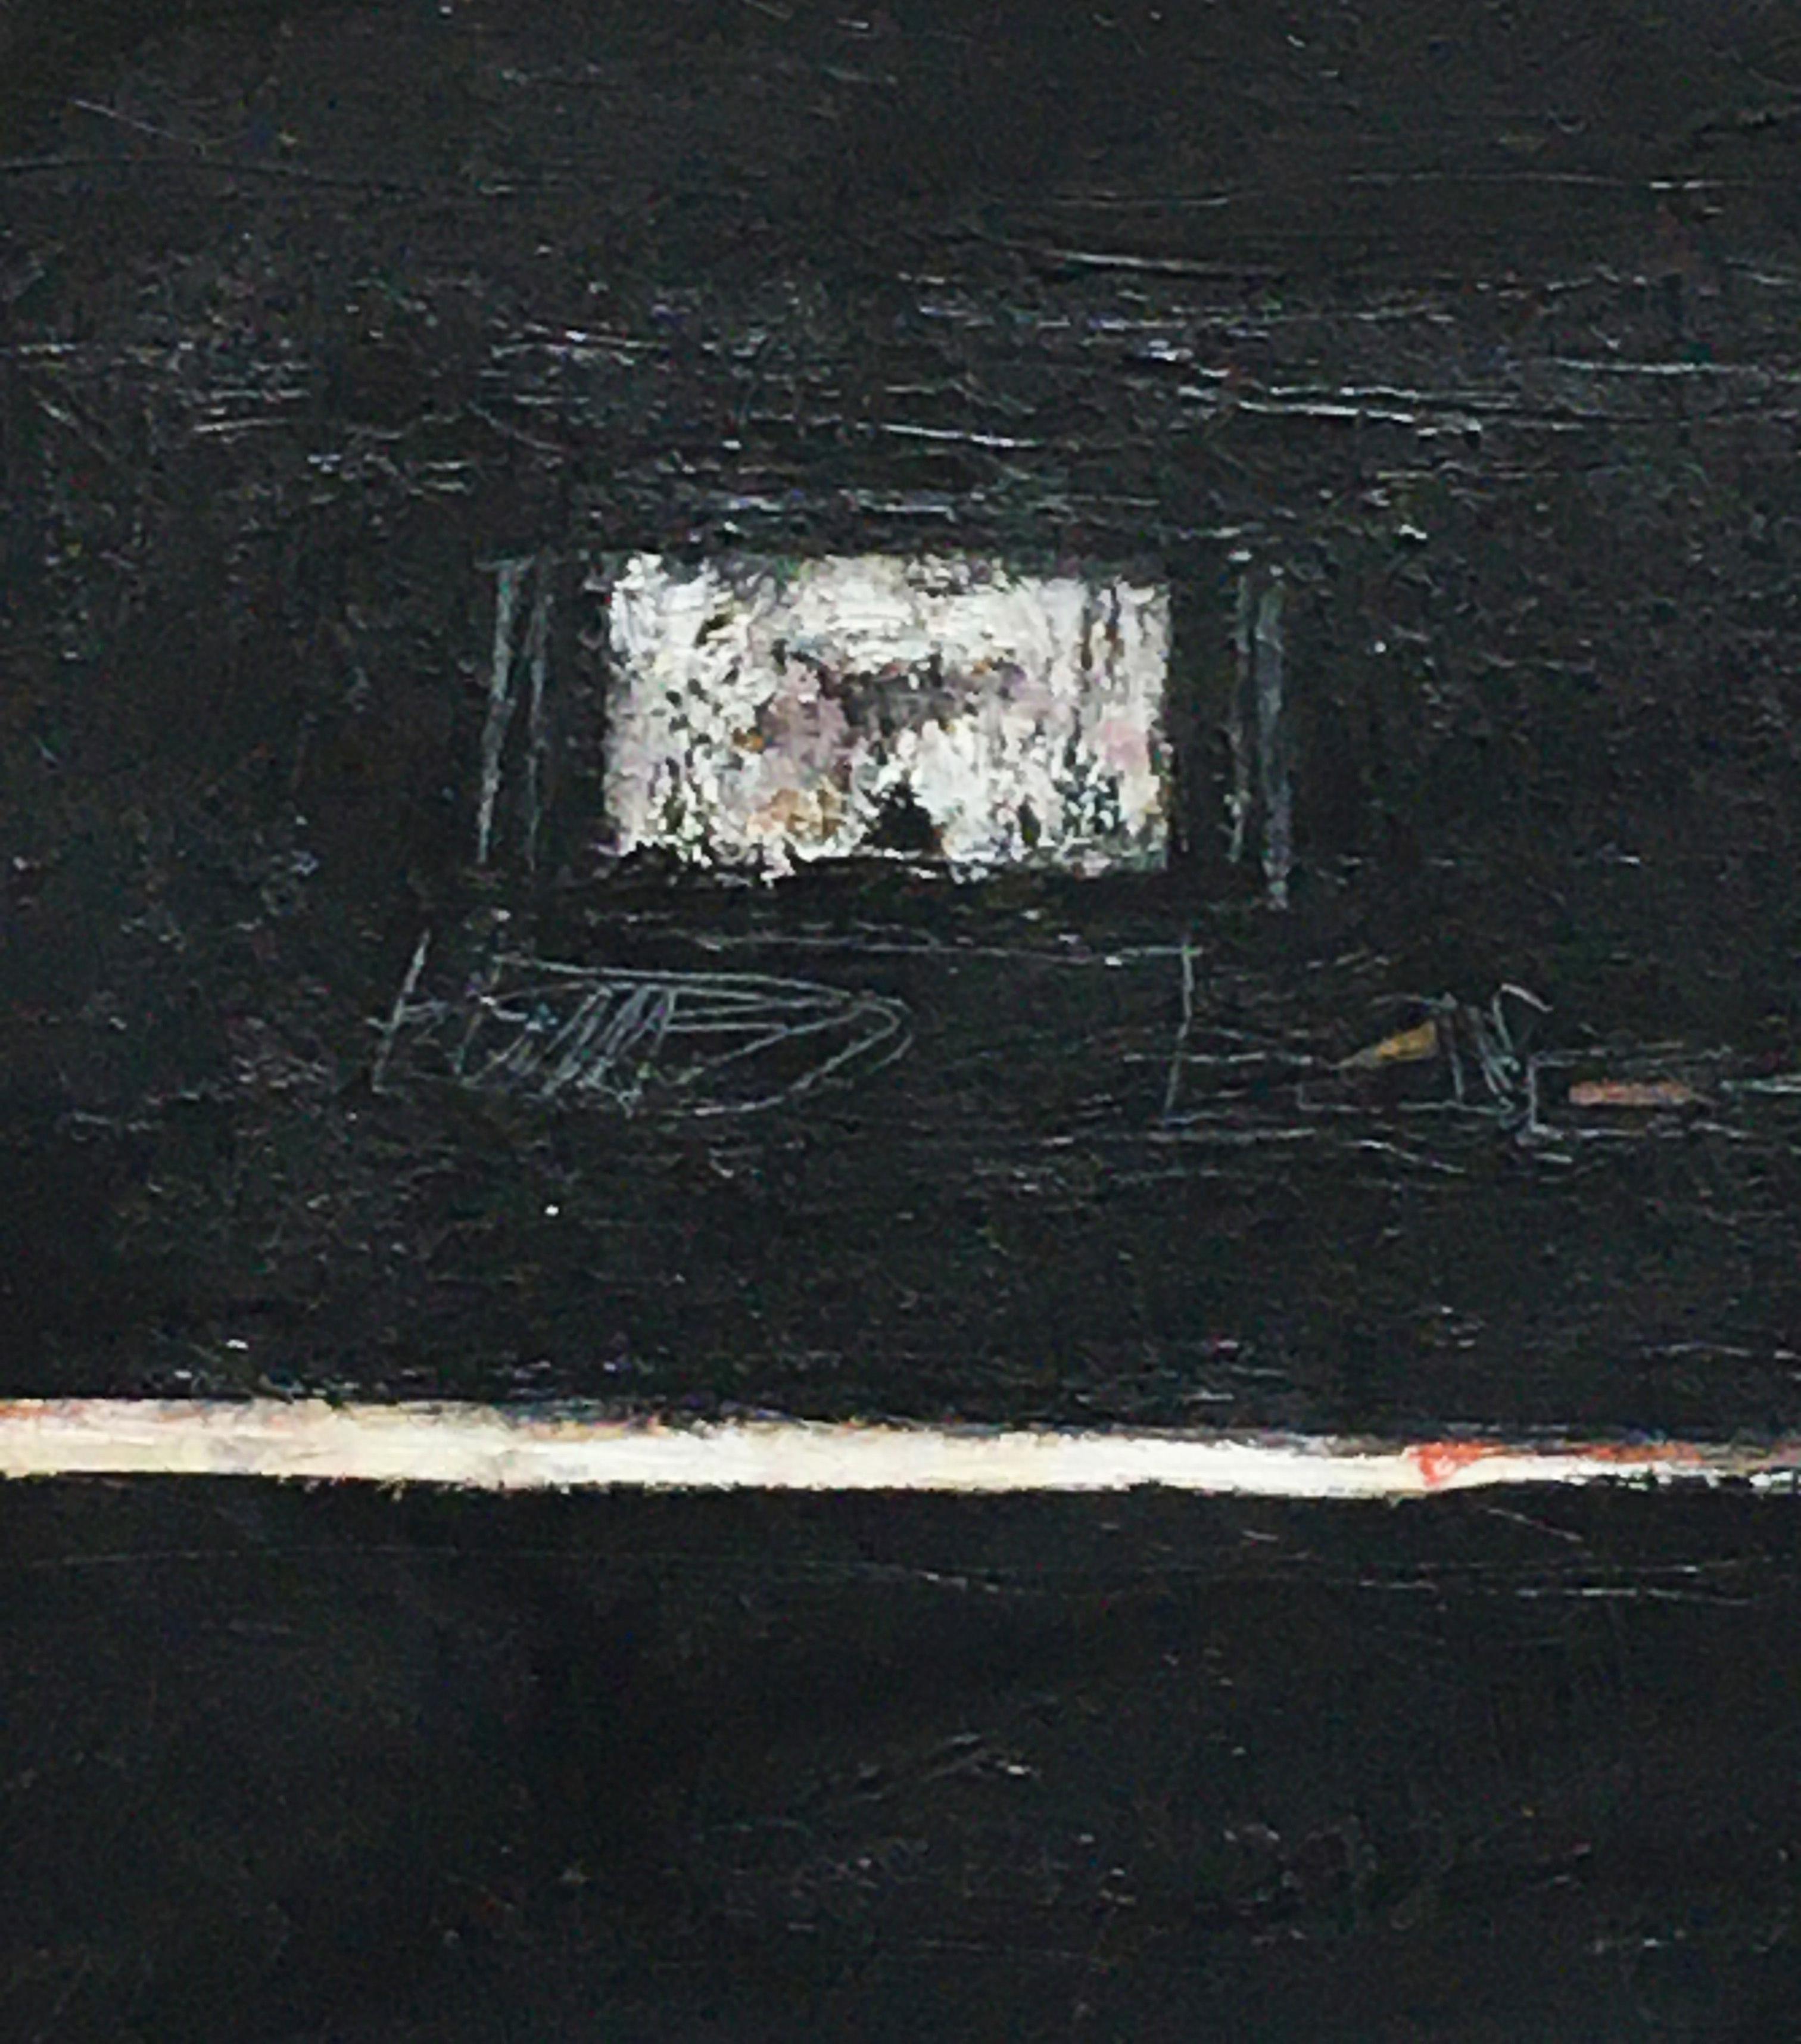 THE VOYAGE - Italian abstract oil on canvas painting, Massimo d'Orta - Abstract Painting by Massimo D'Orta